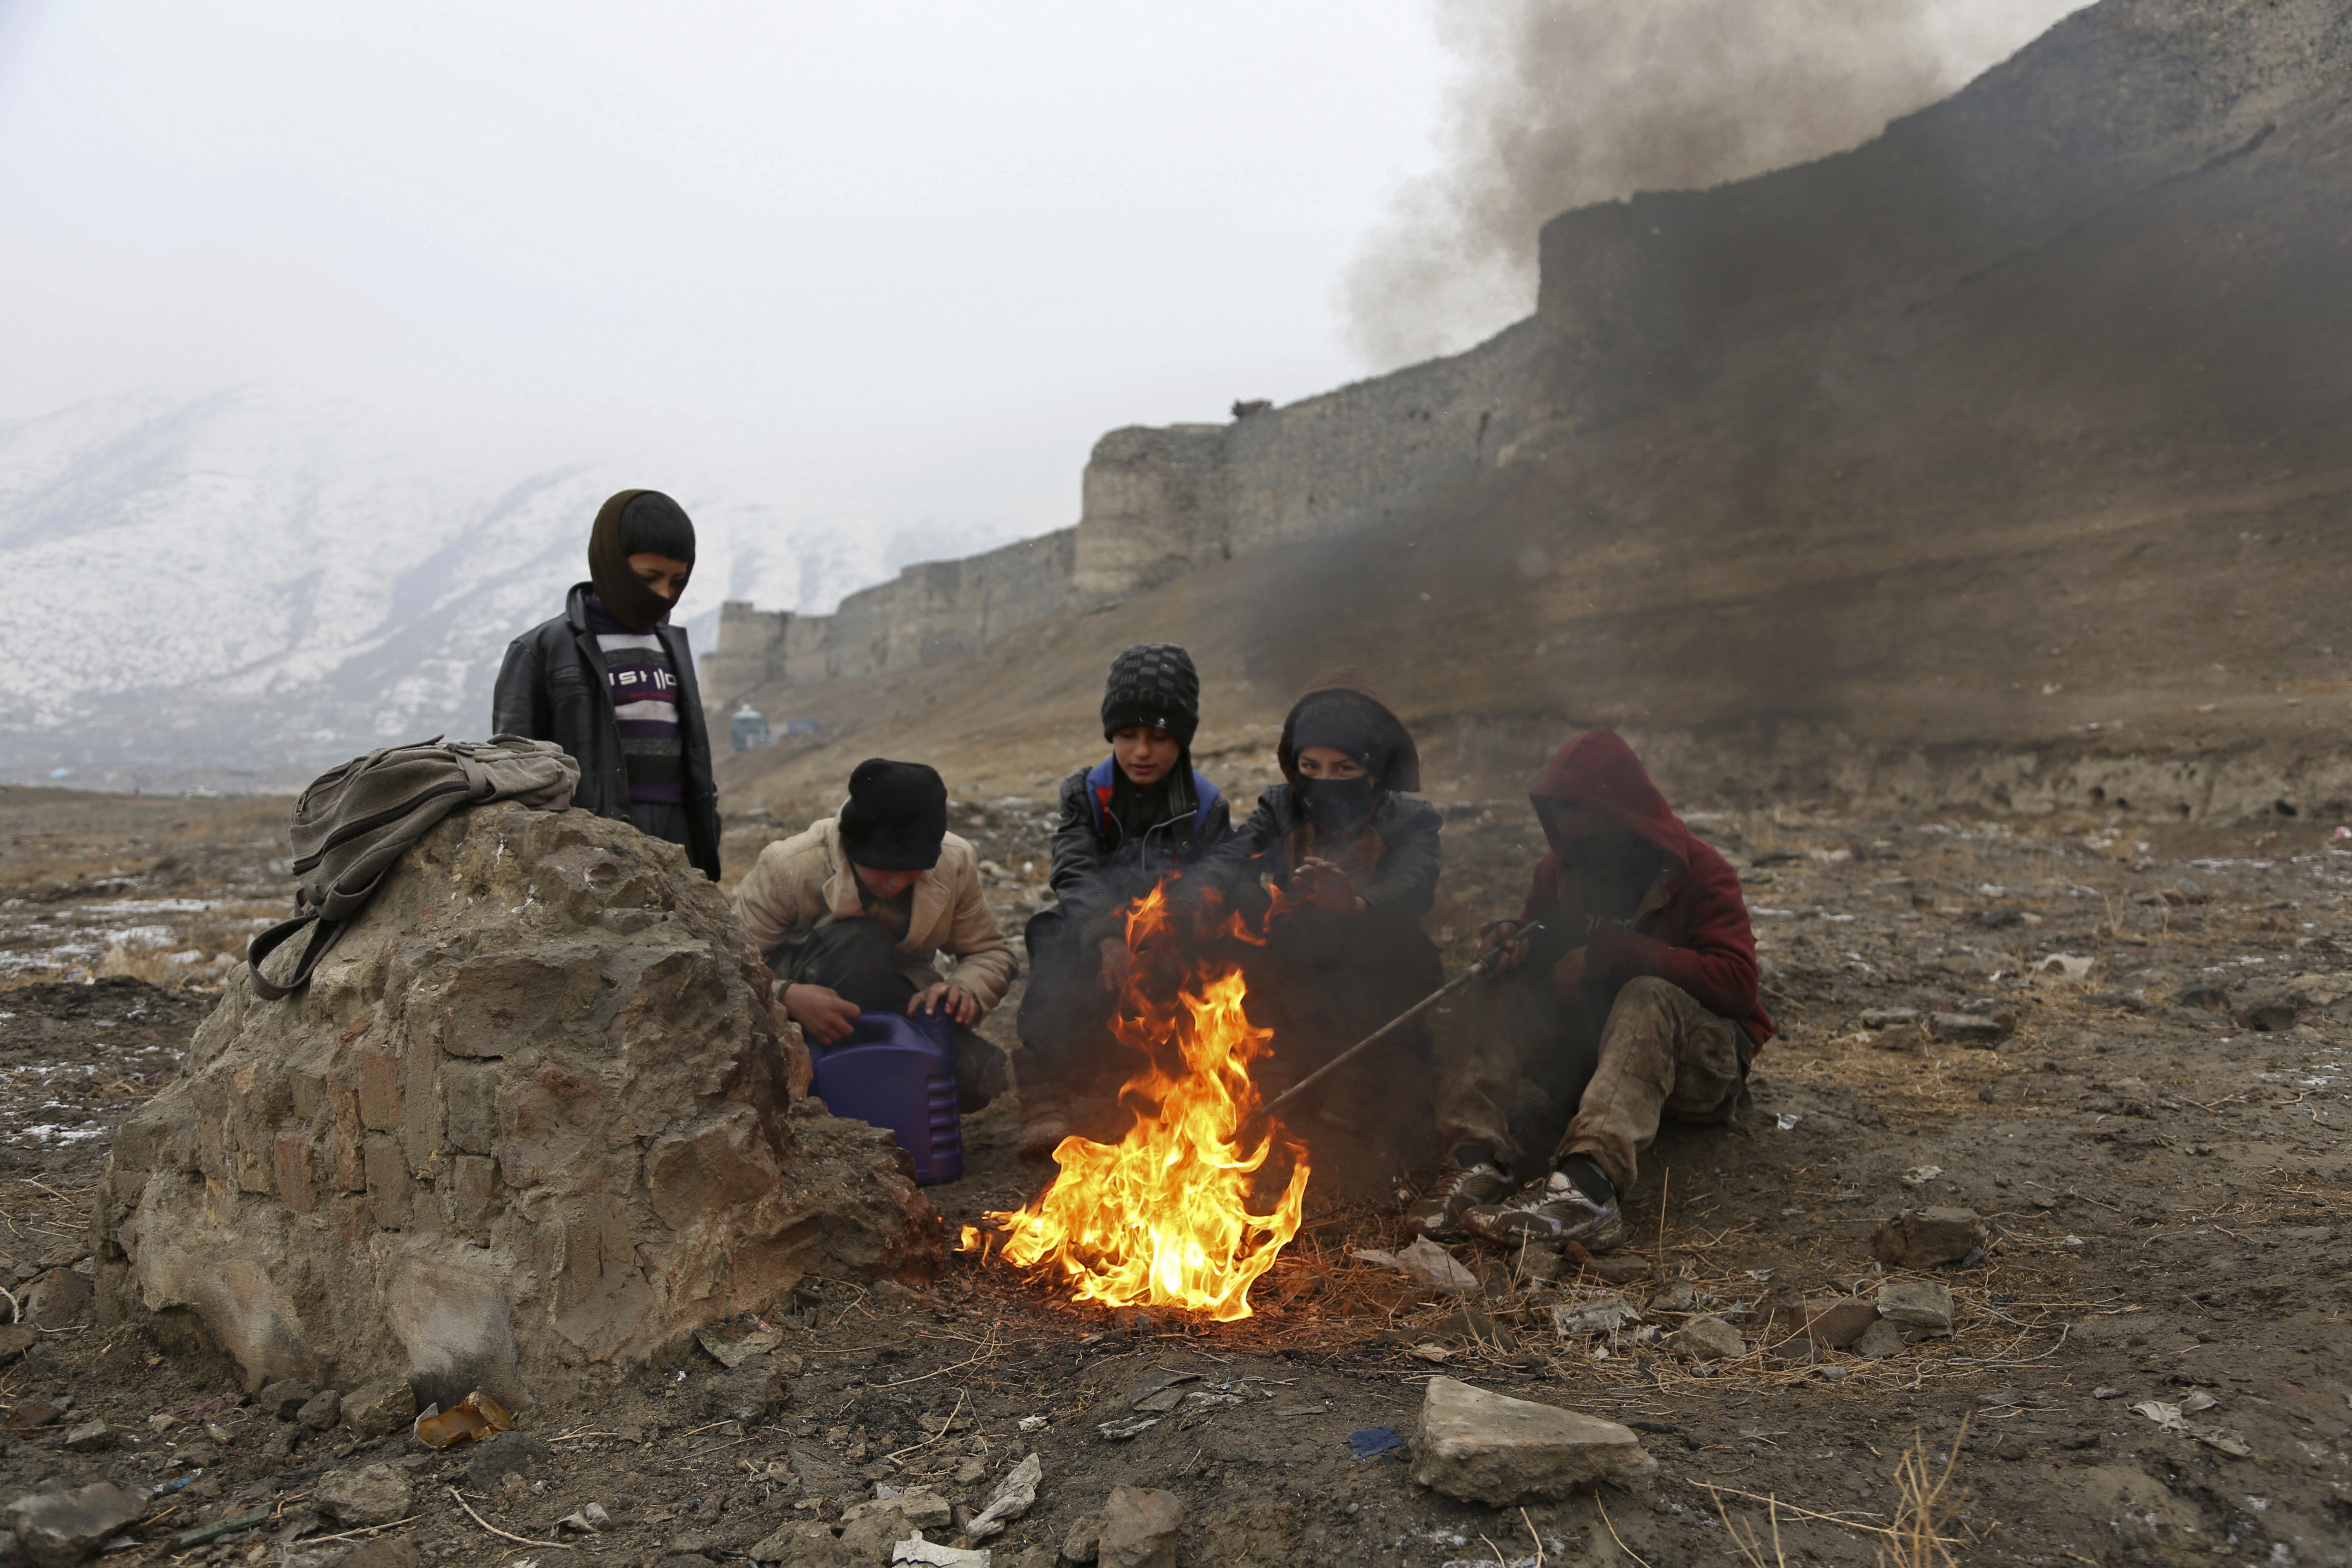 Boys warm themselves near a fire during a rainy day, on the outskirts of Kabul, Afghanistan, Wednesday, Jan. 31, 2018. (AP Photo/Rahmat Gul)